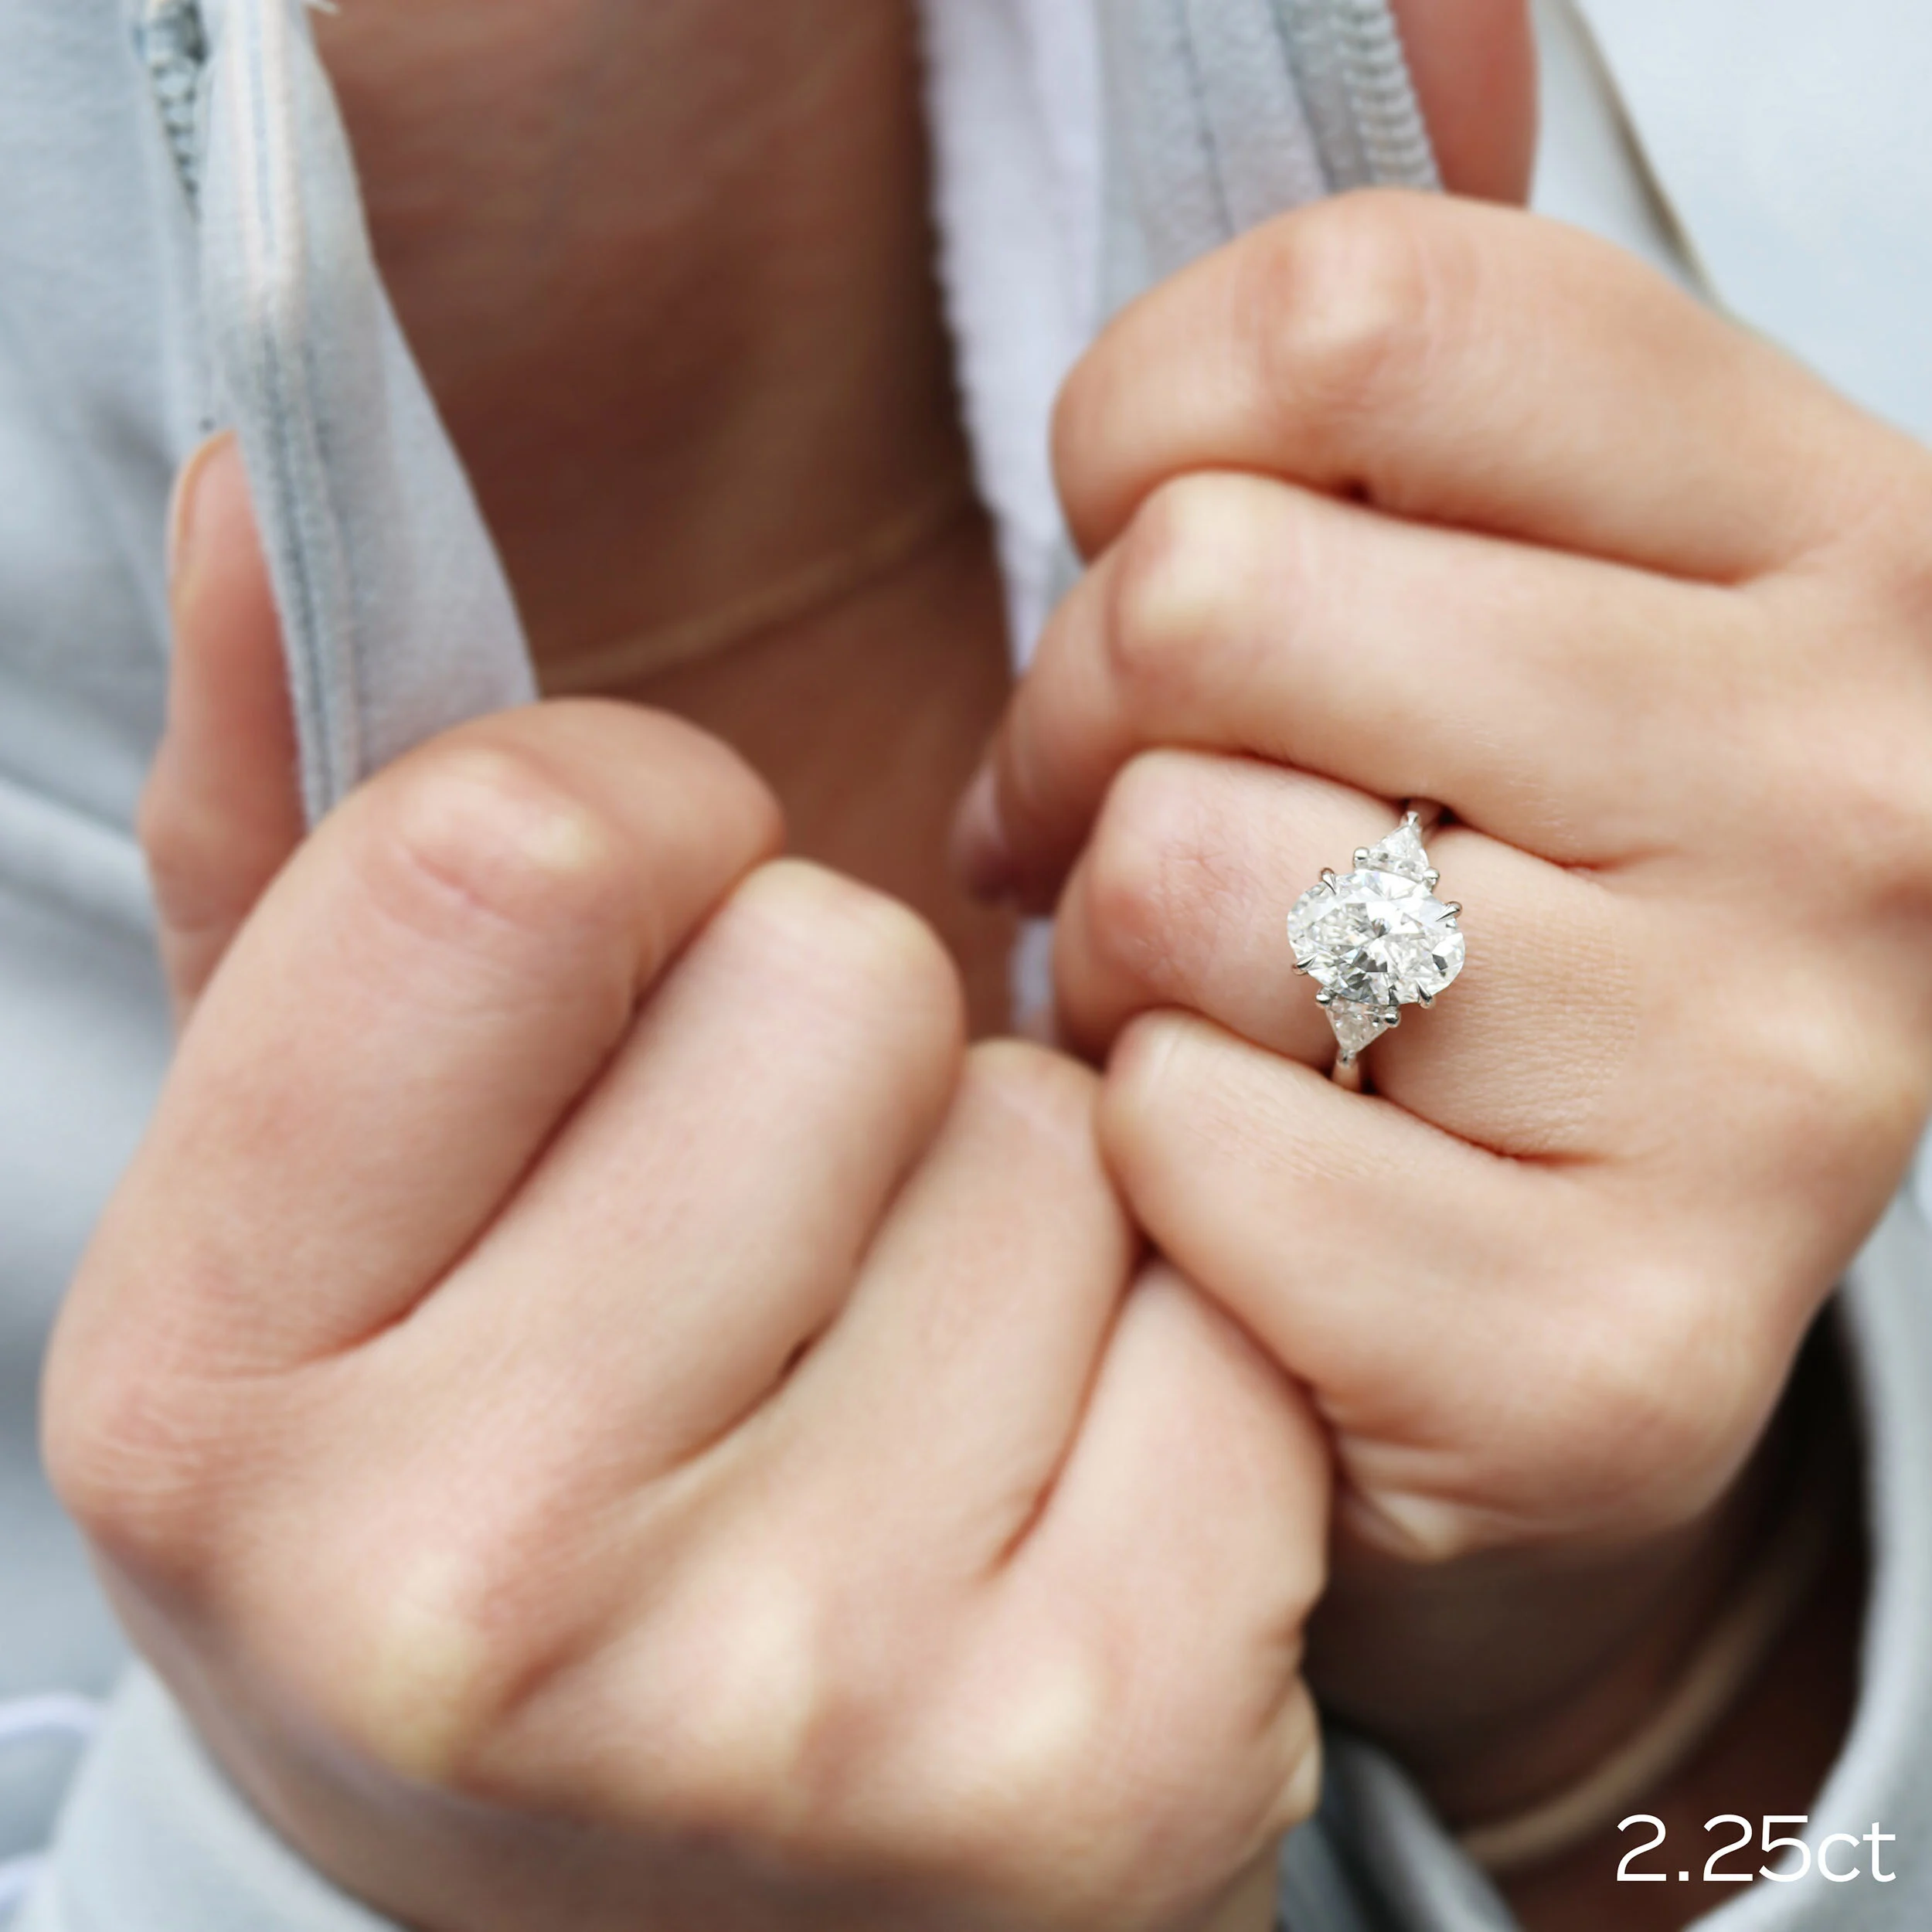 ada diamond 2.25ct oval lab grown diamond custom engagement ring featuring trillion side stones